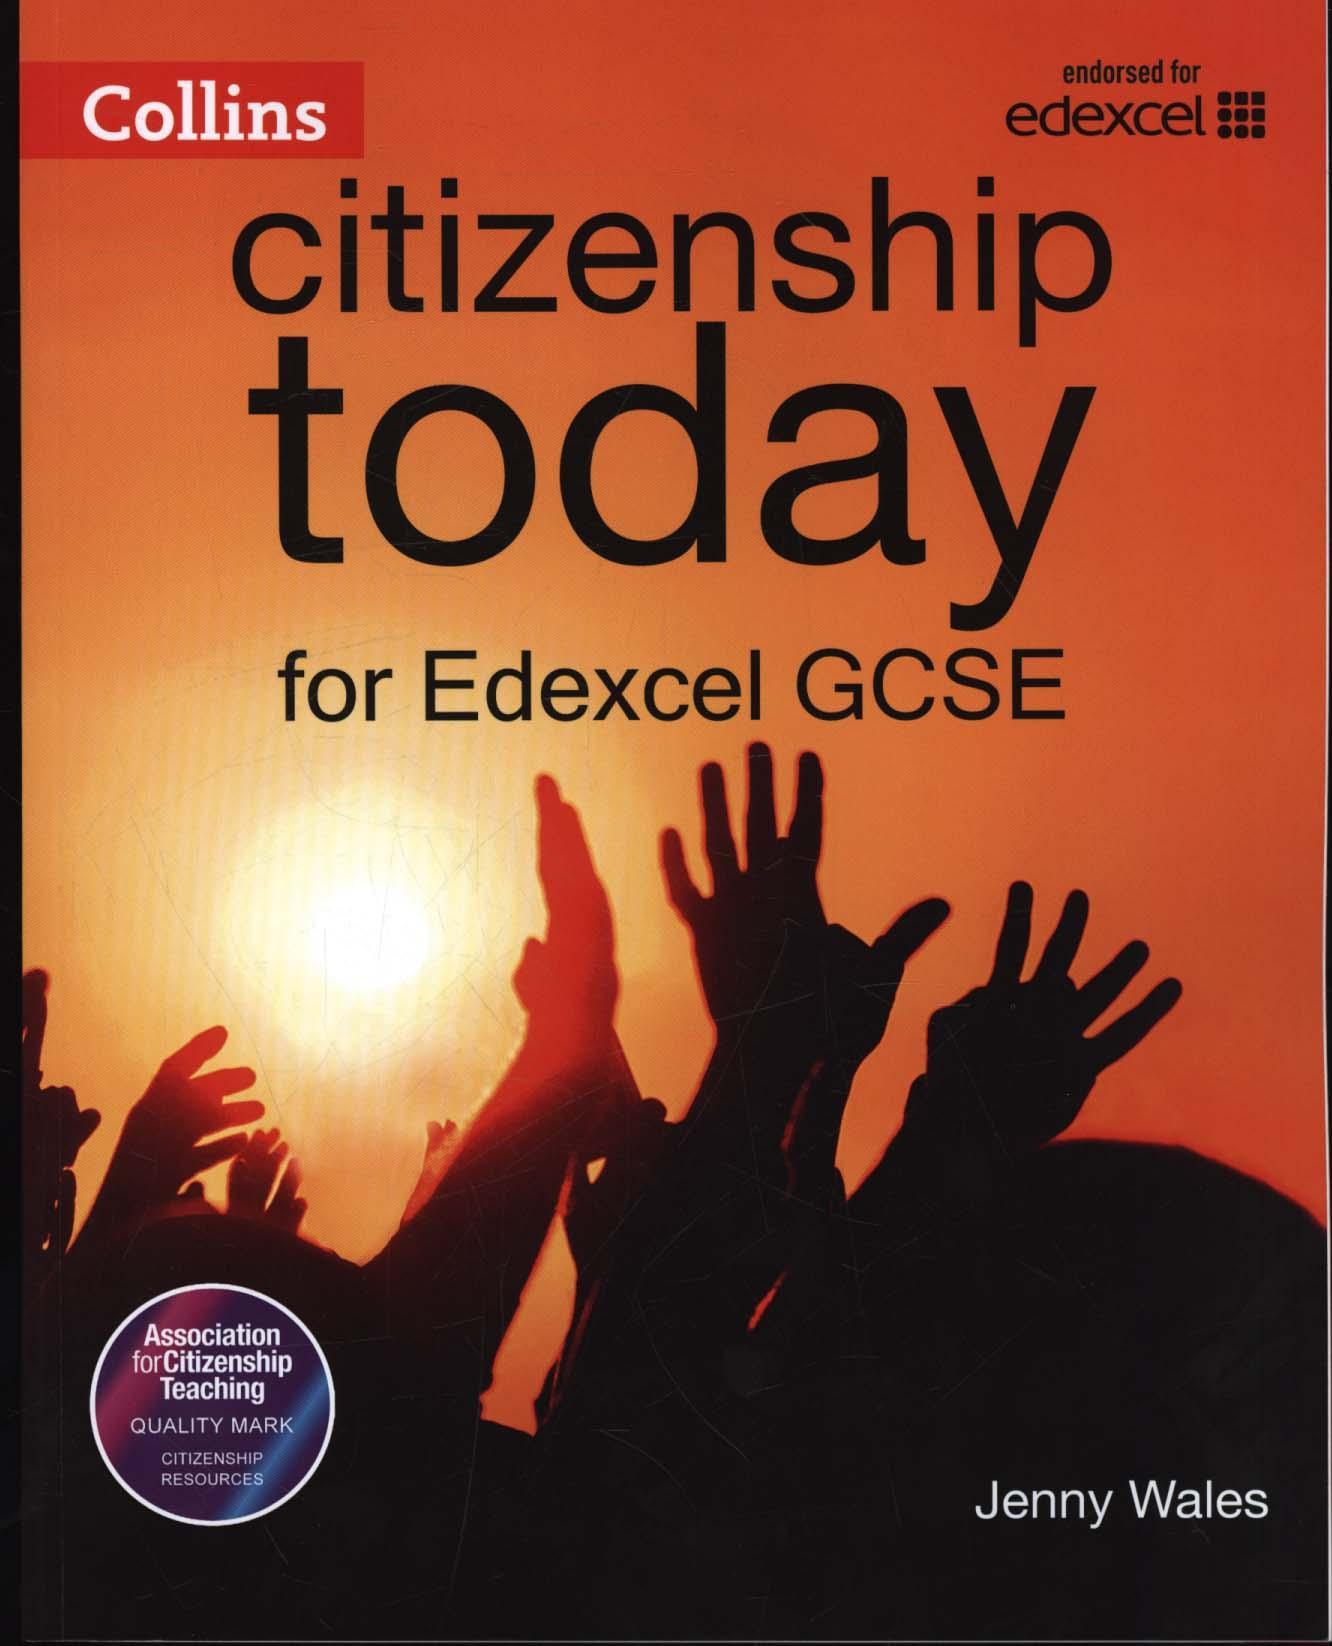 Edexcel GCSE Citizenship Student's Book 4th edition